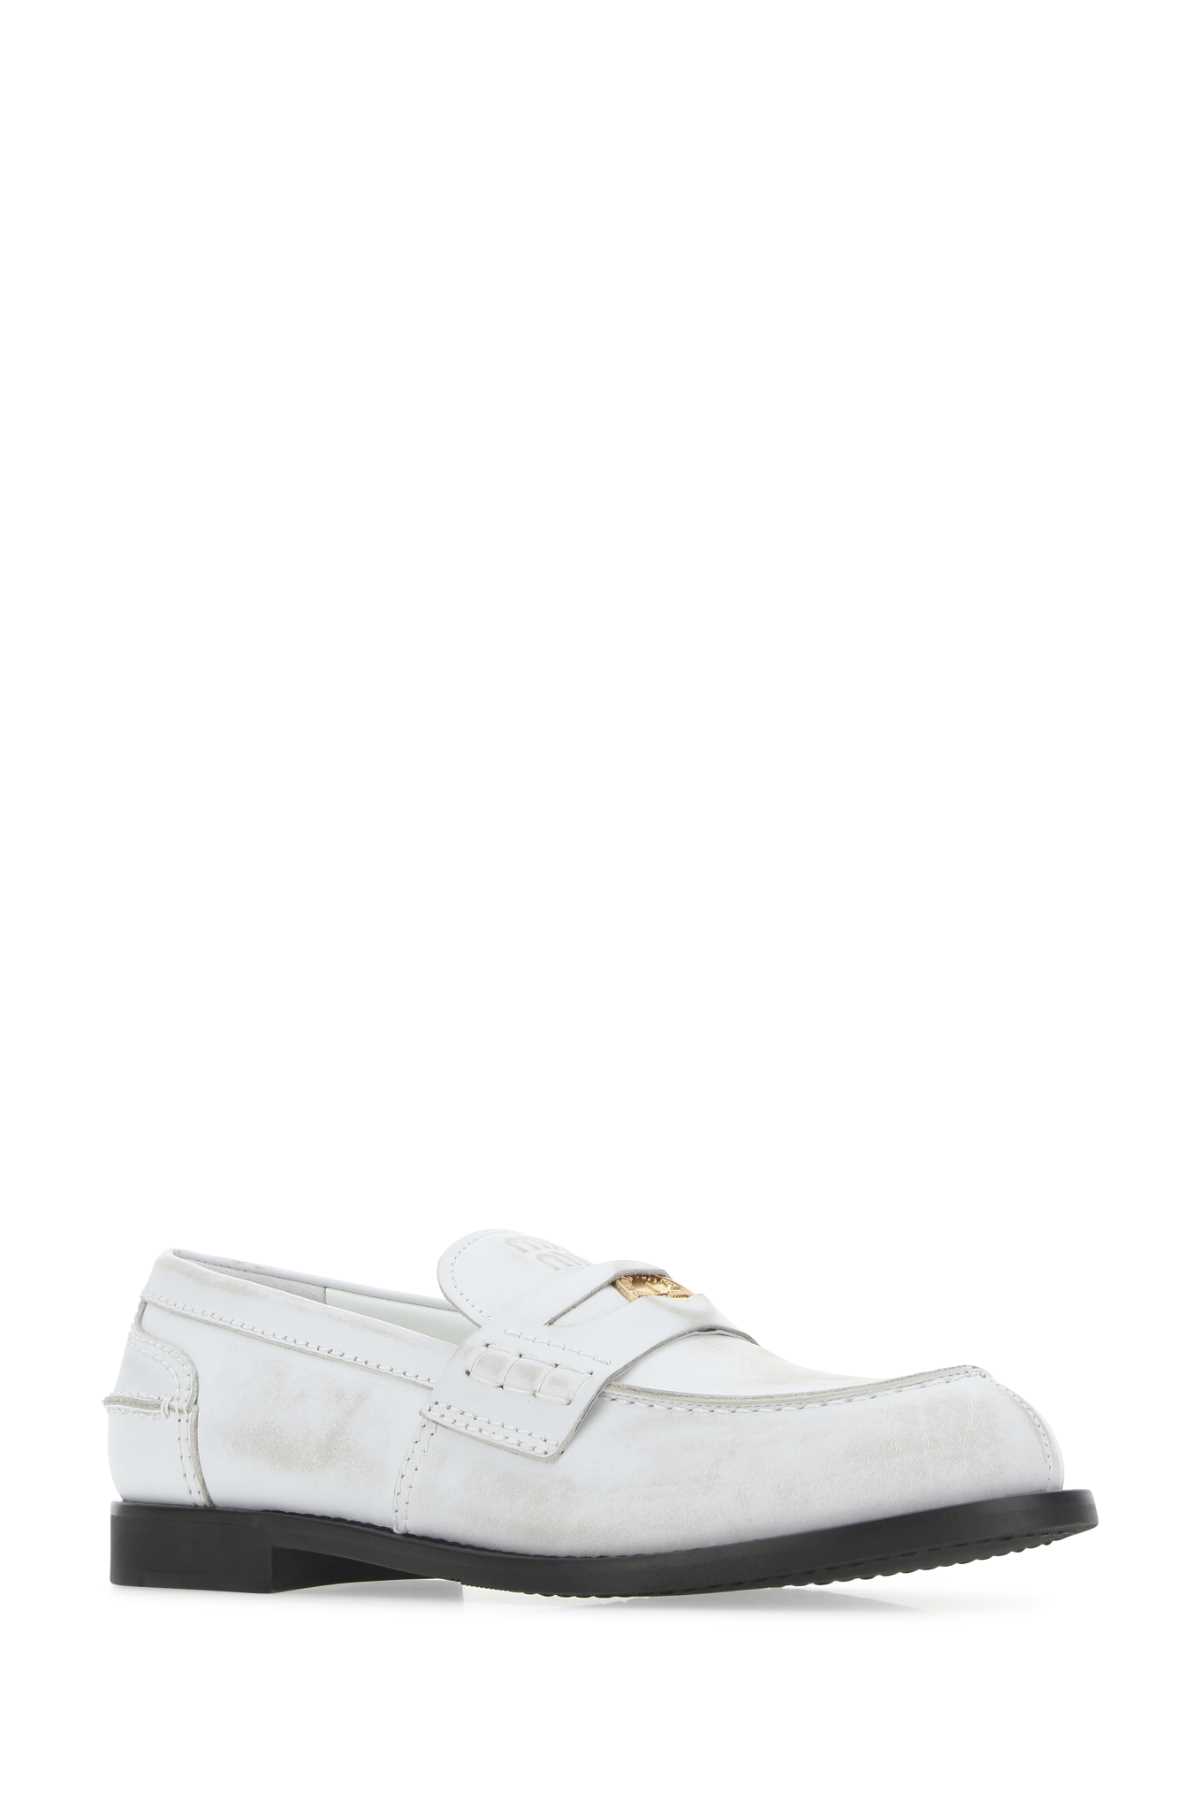 Shop Miu Miu White Leather Loafers